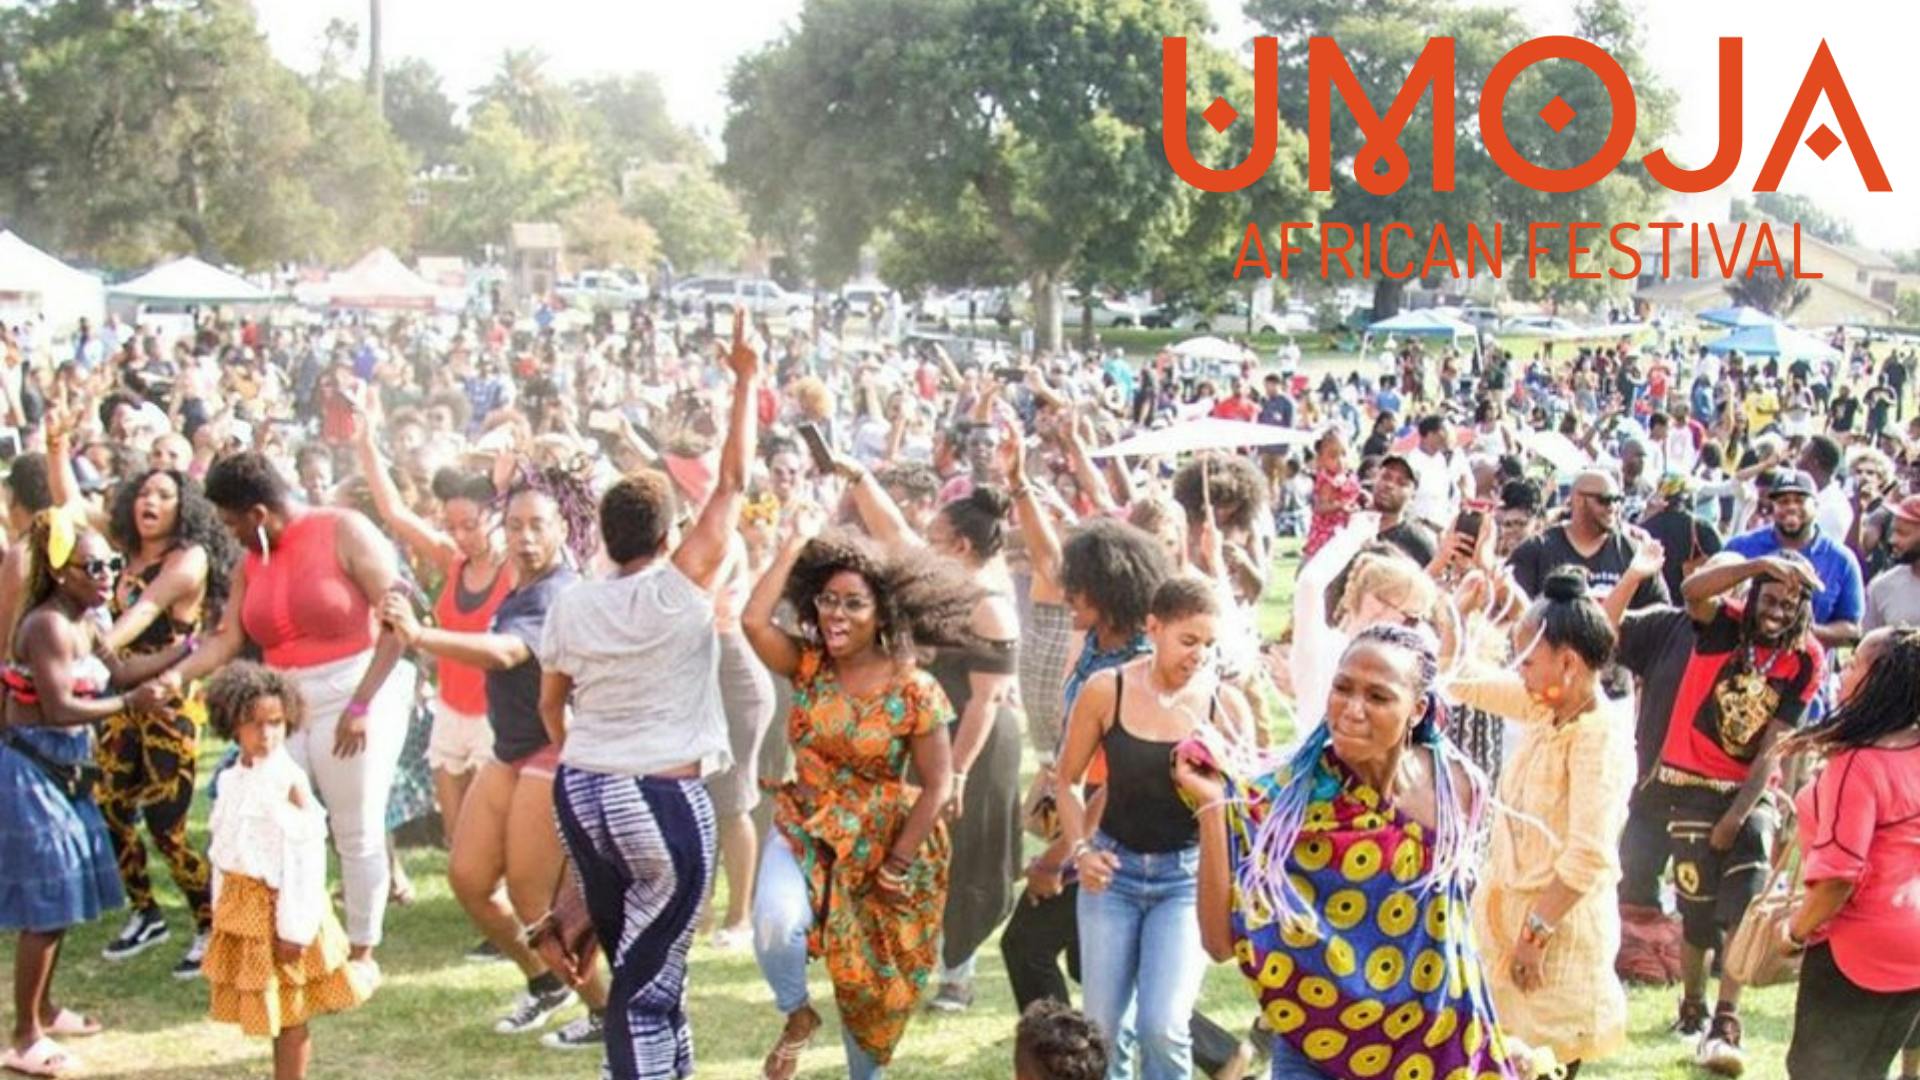 The Umoja African Festival